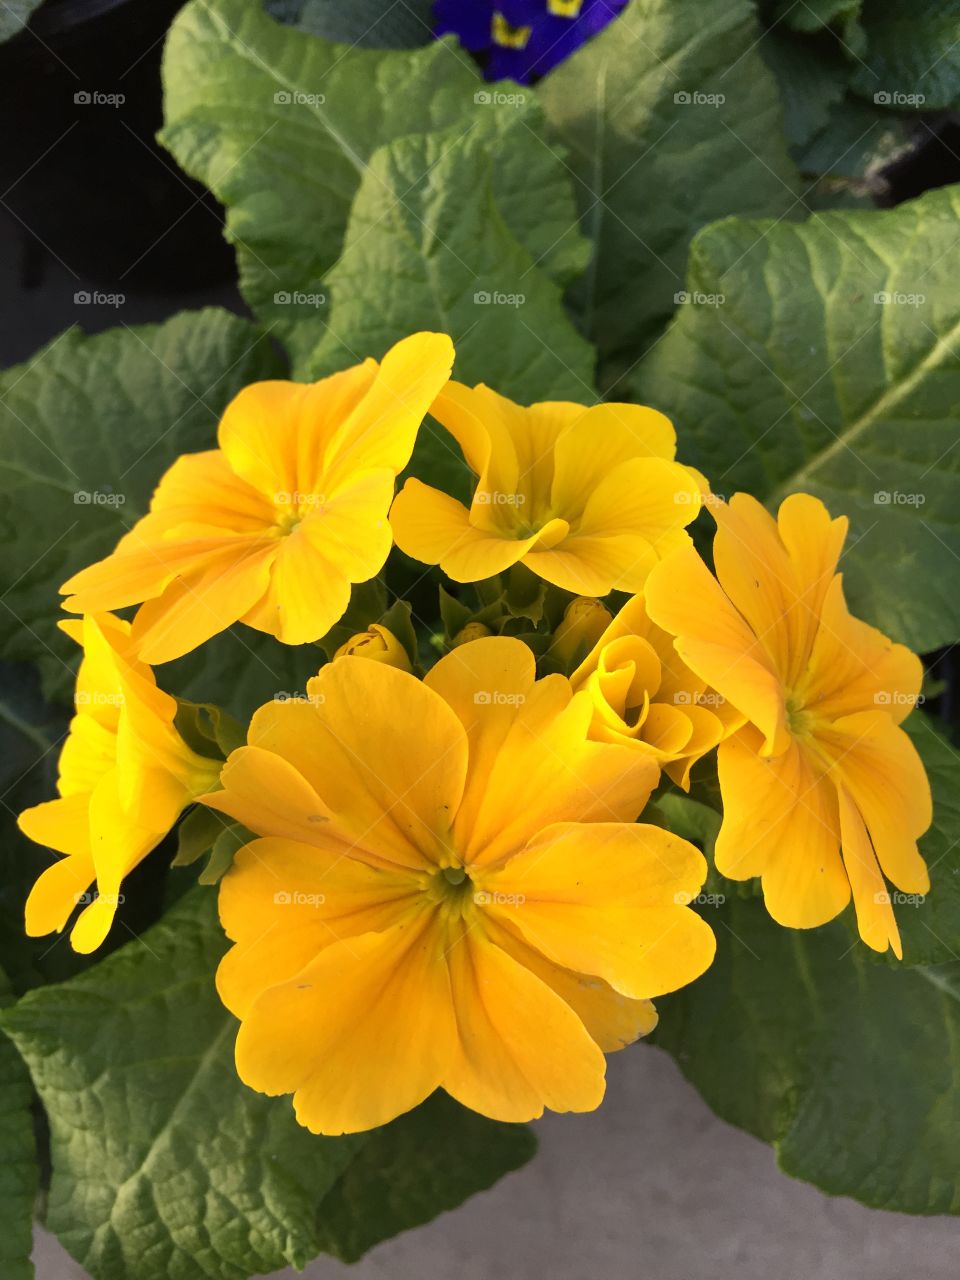 Yellow
Flower